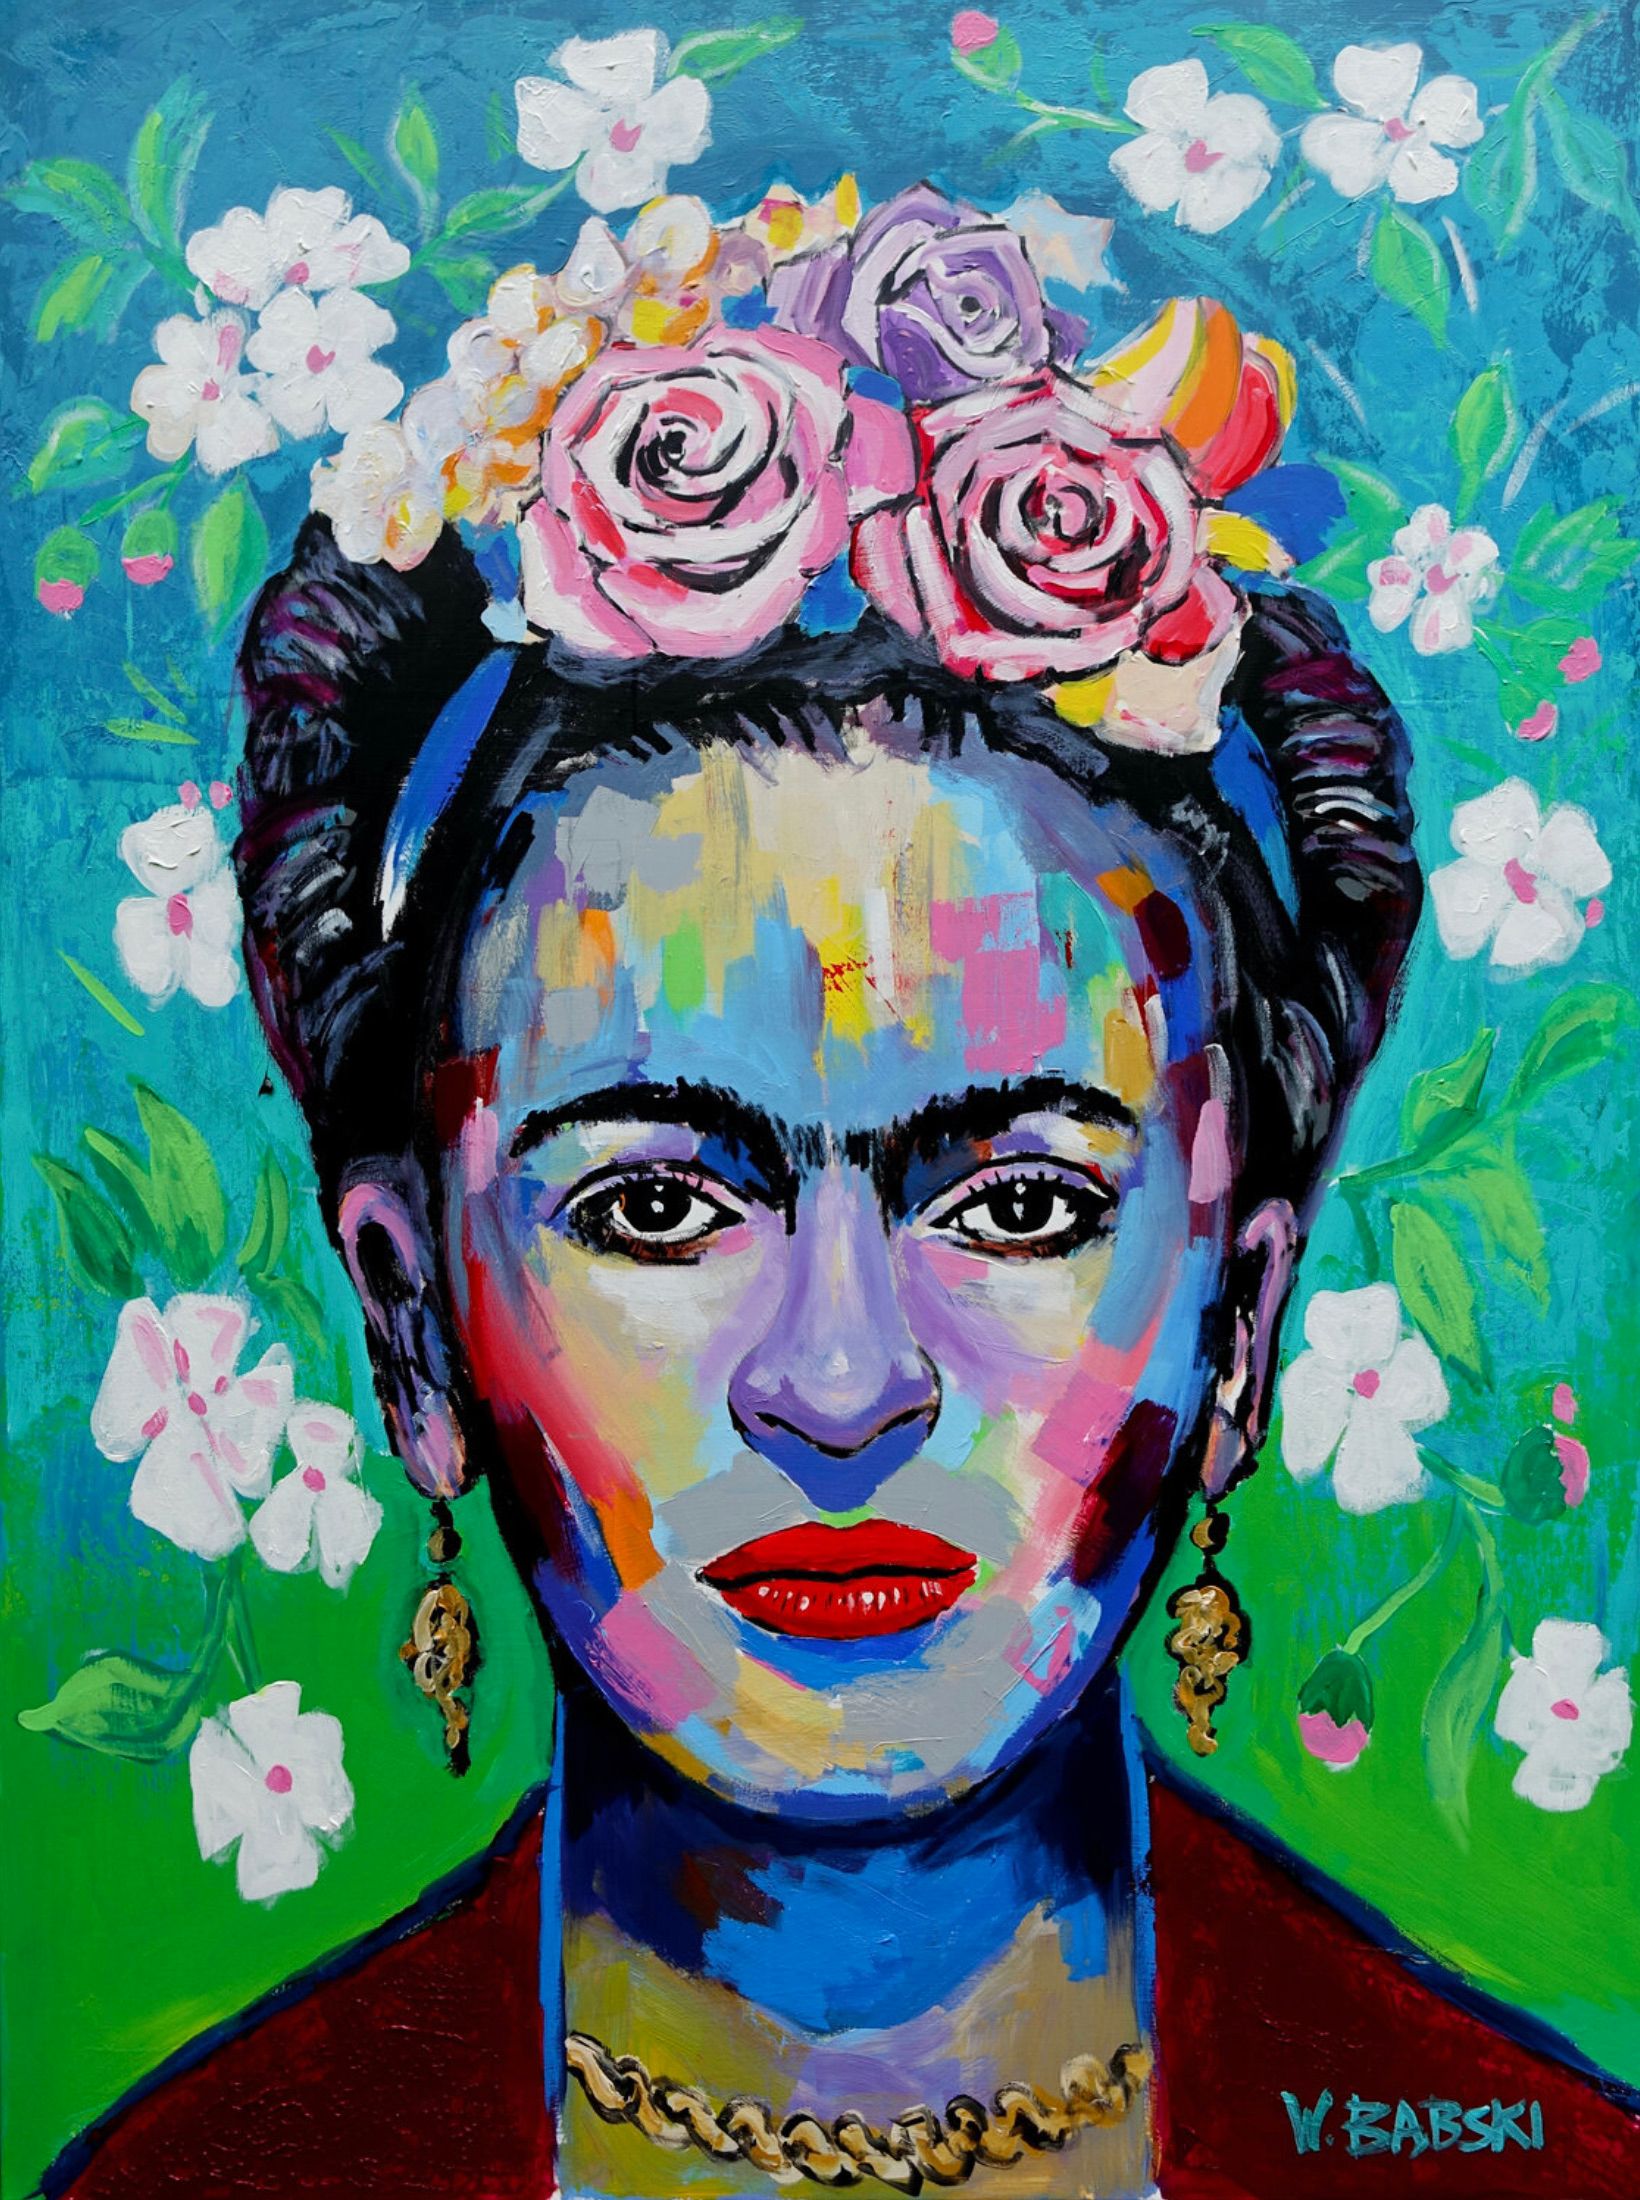 Wojtek Babski Frida 2, portrait coloré de la peintre Frida Kahlo